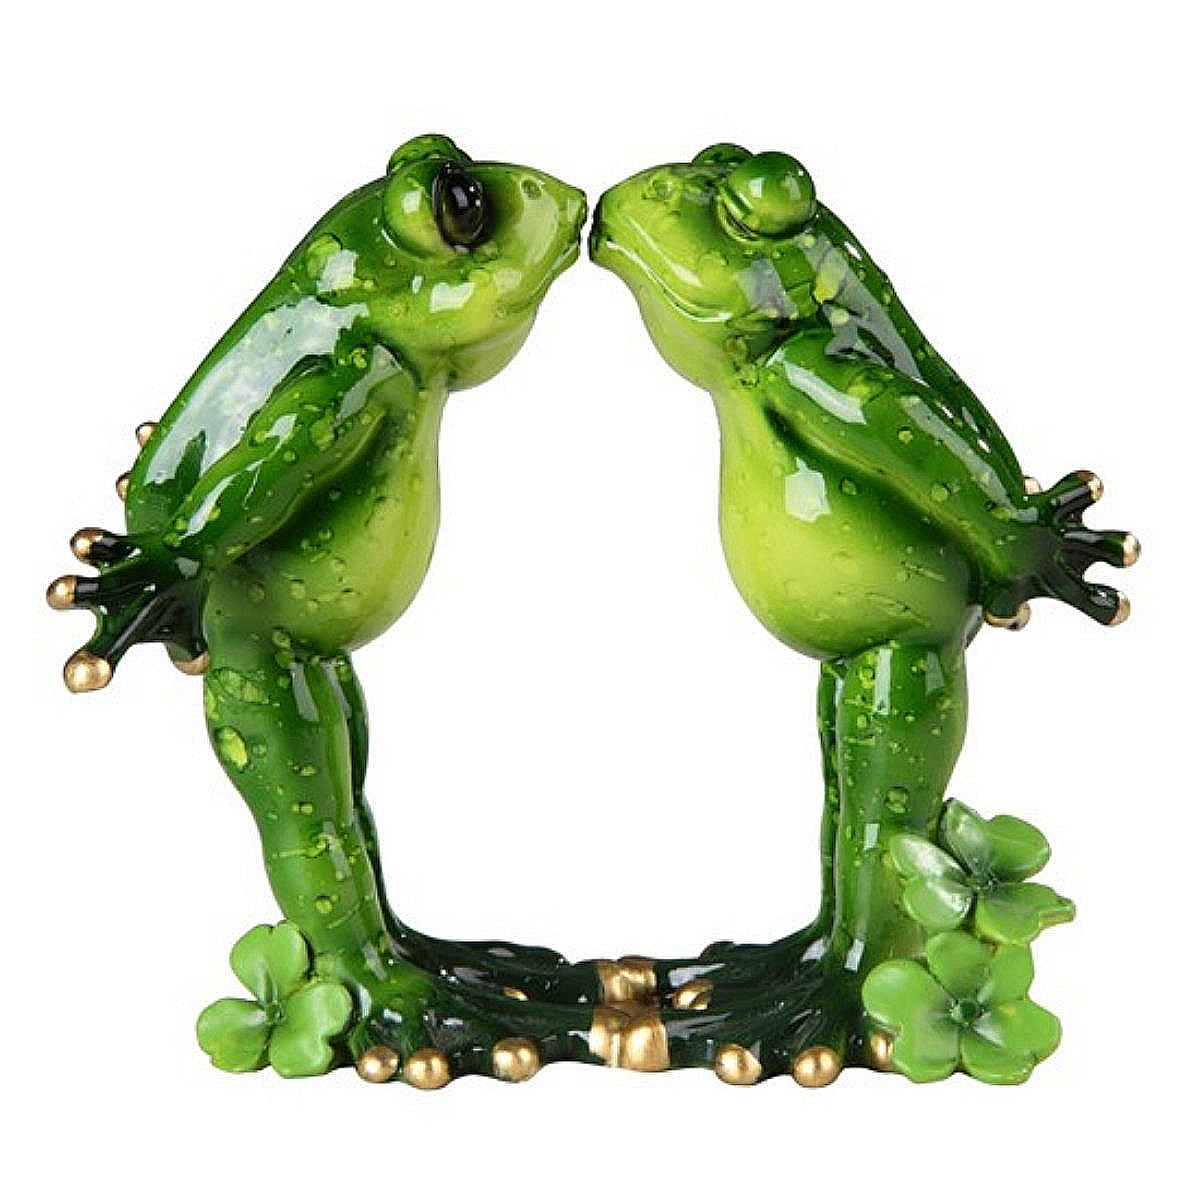  Frog Figurines